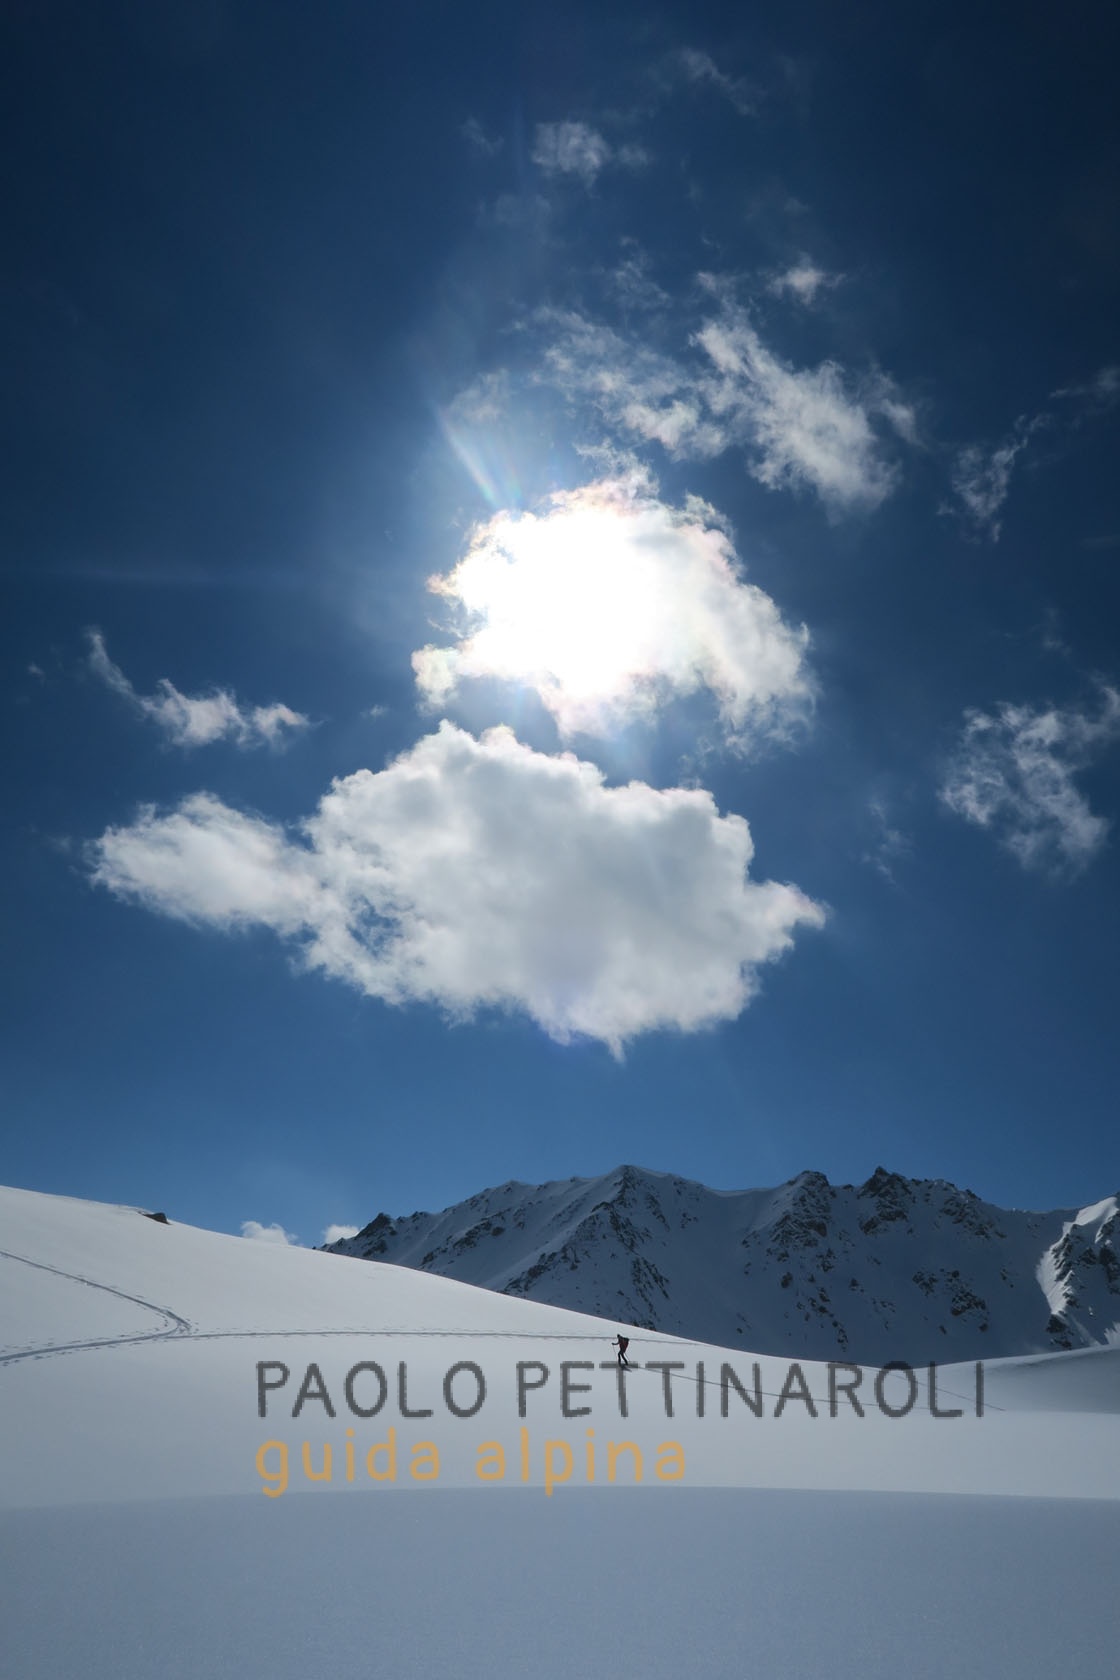 IMG_3225-panorami_paolo pettinaroli guida alpina